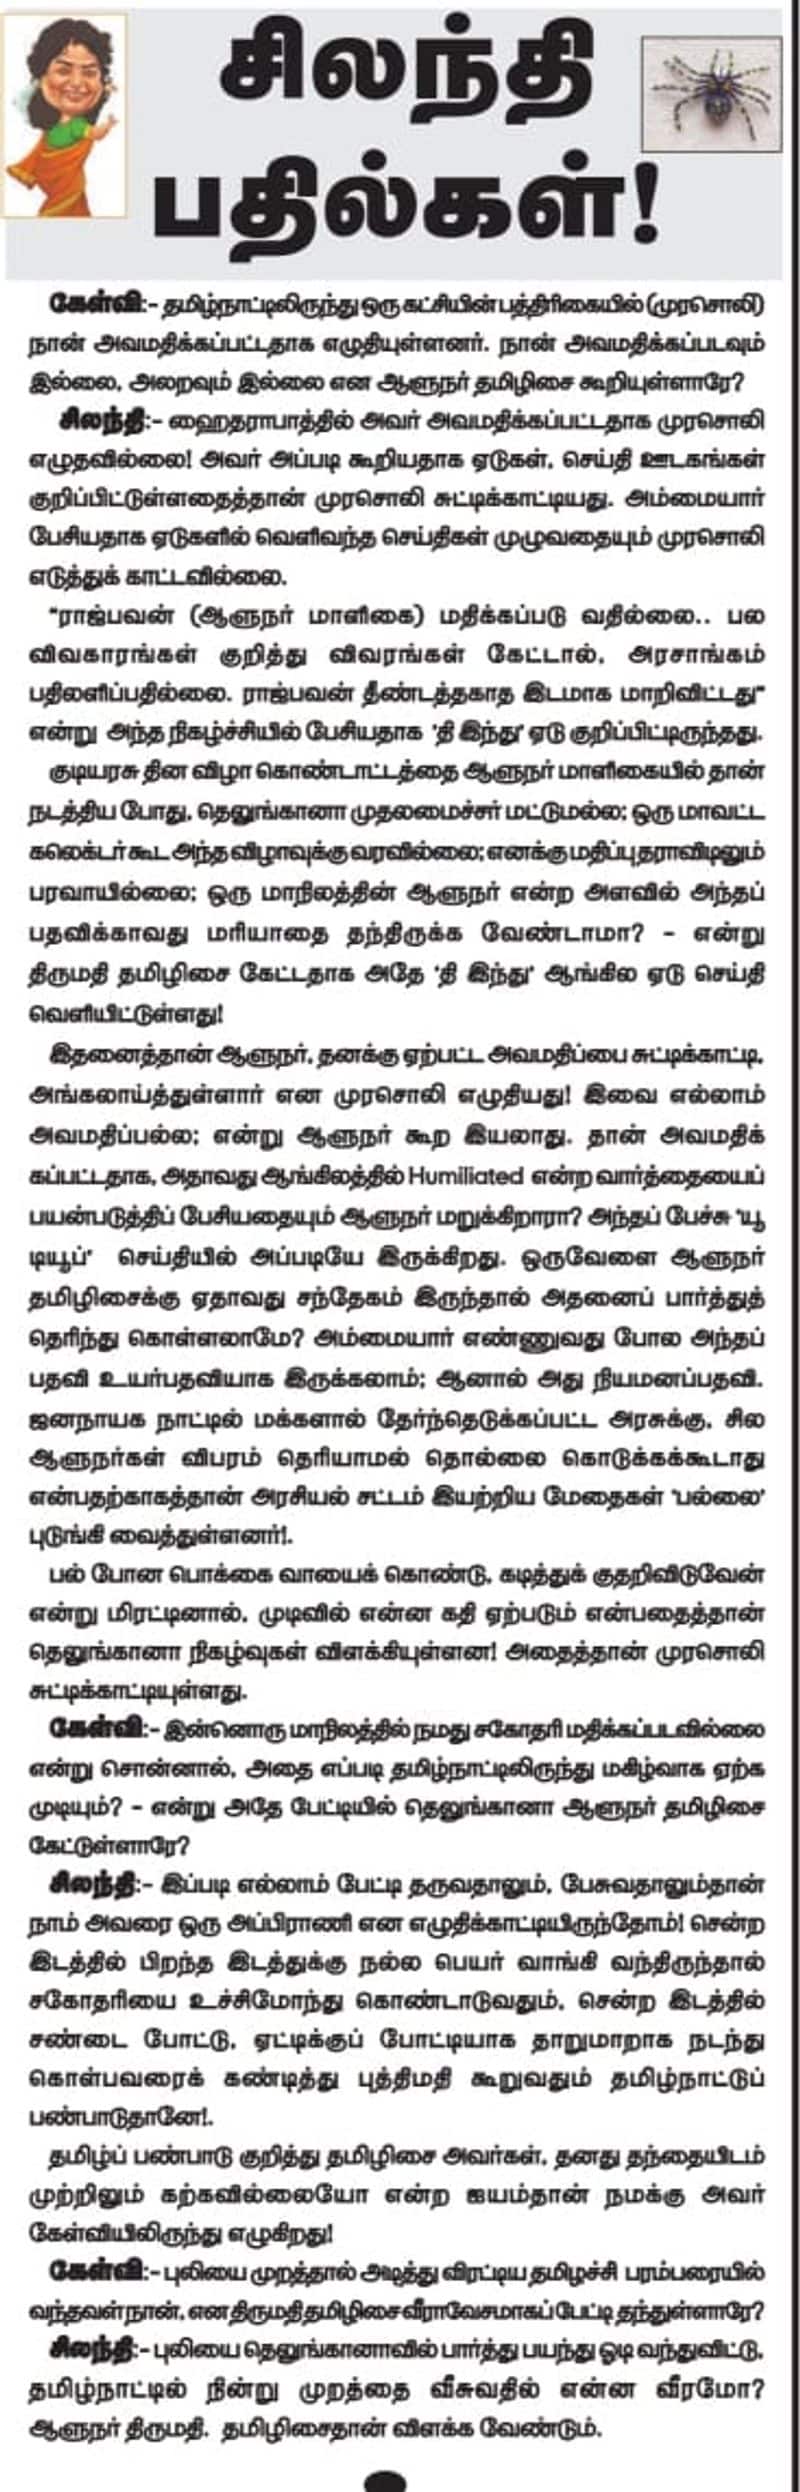 Murasoli newspaper article criticizing Telangana Governor Tamilisai